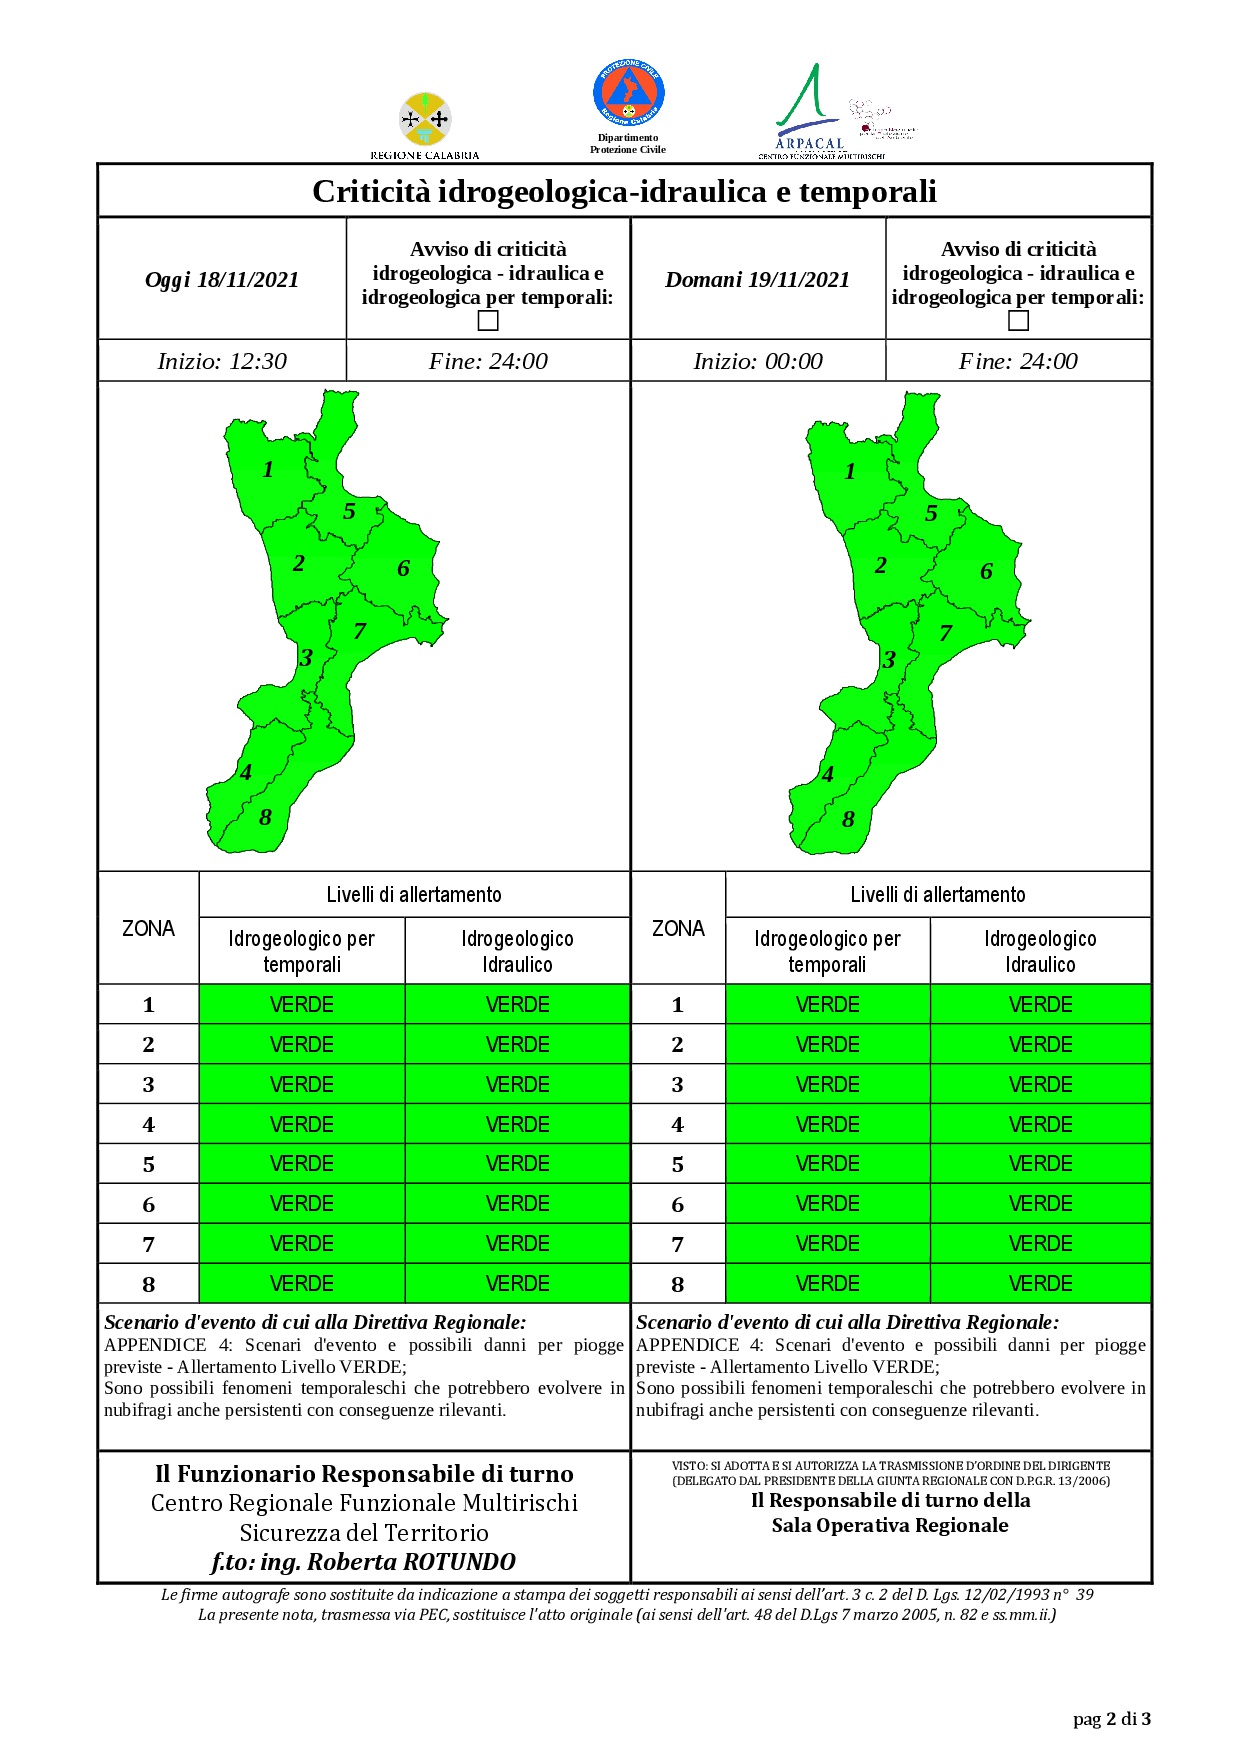 Criticità idrogeologica-idraulica e temporali in Calabria 18-11-2021